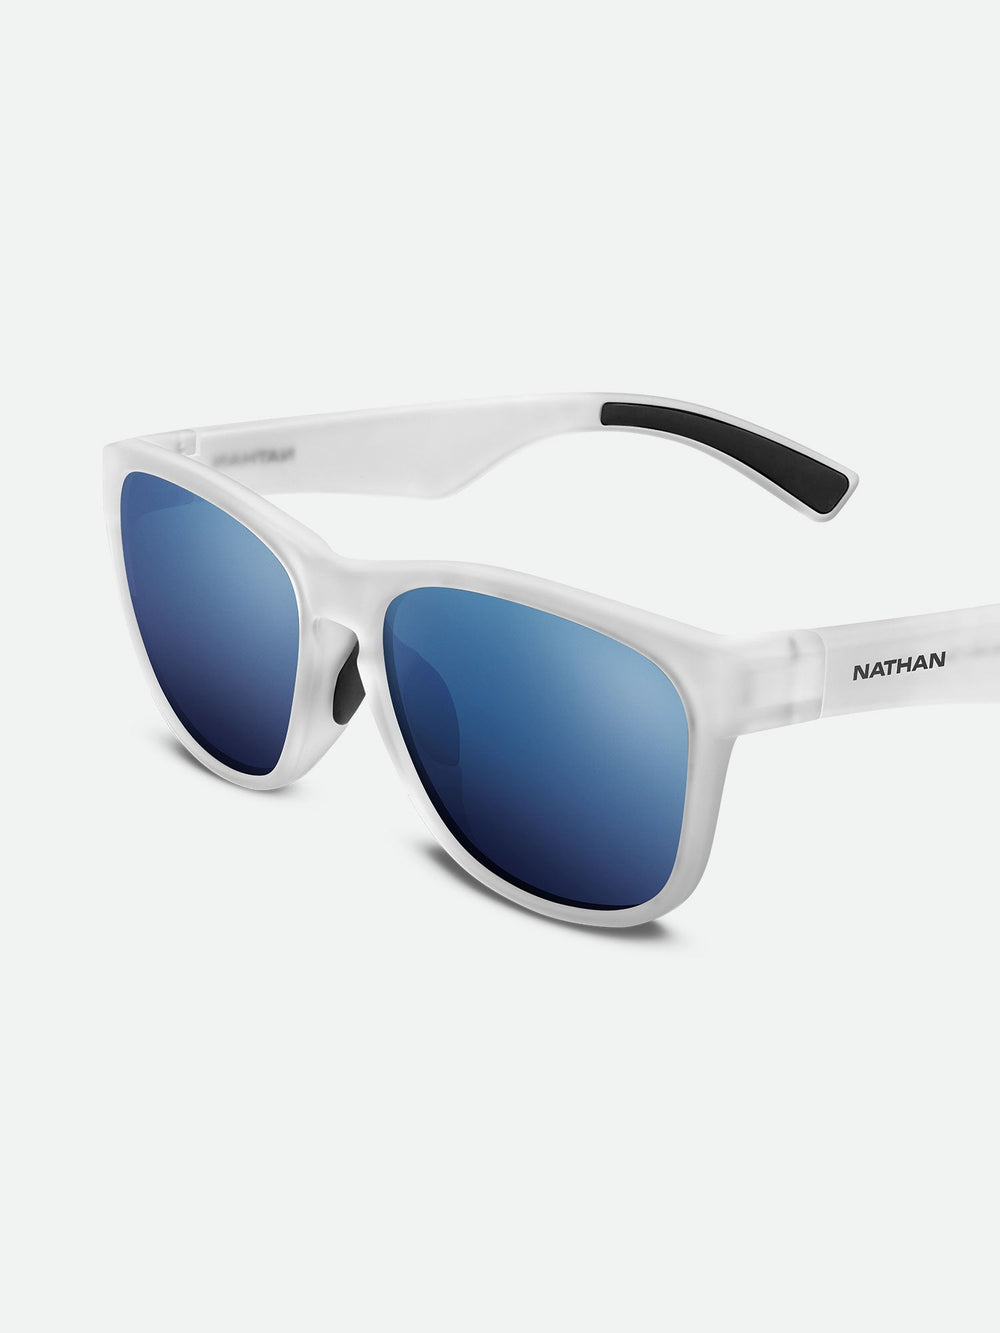 Buy GLINDAR Retro Polarized Sunglasses for Men Women Vintage Square Mirror  Glasses UV400 Black Blue Frame/Mirror Blue Lens at Amazon.in